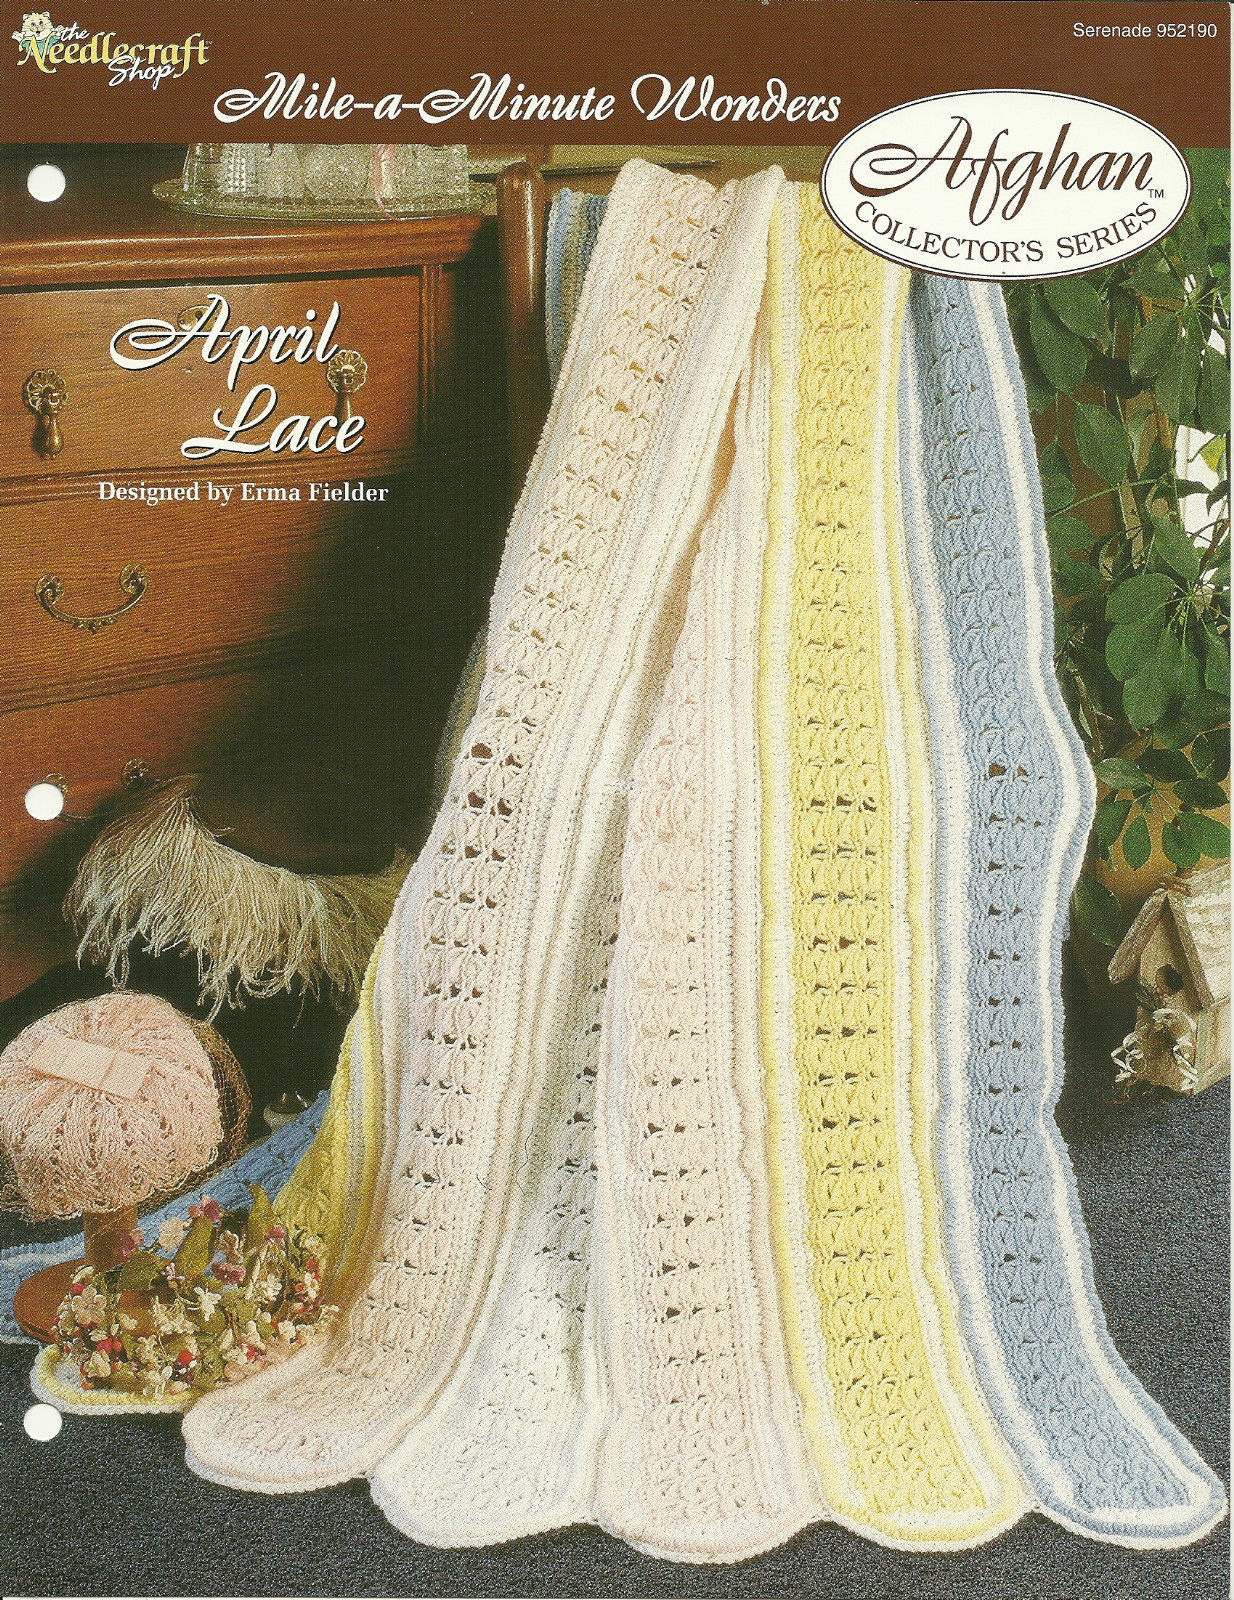 Needlecraft Shop Crochet Pattern 952190 April Lace Afghan Collectors Series - $2.99